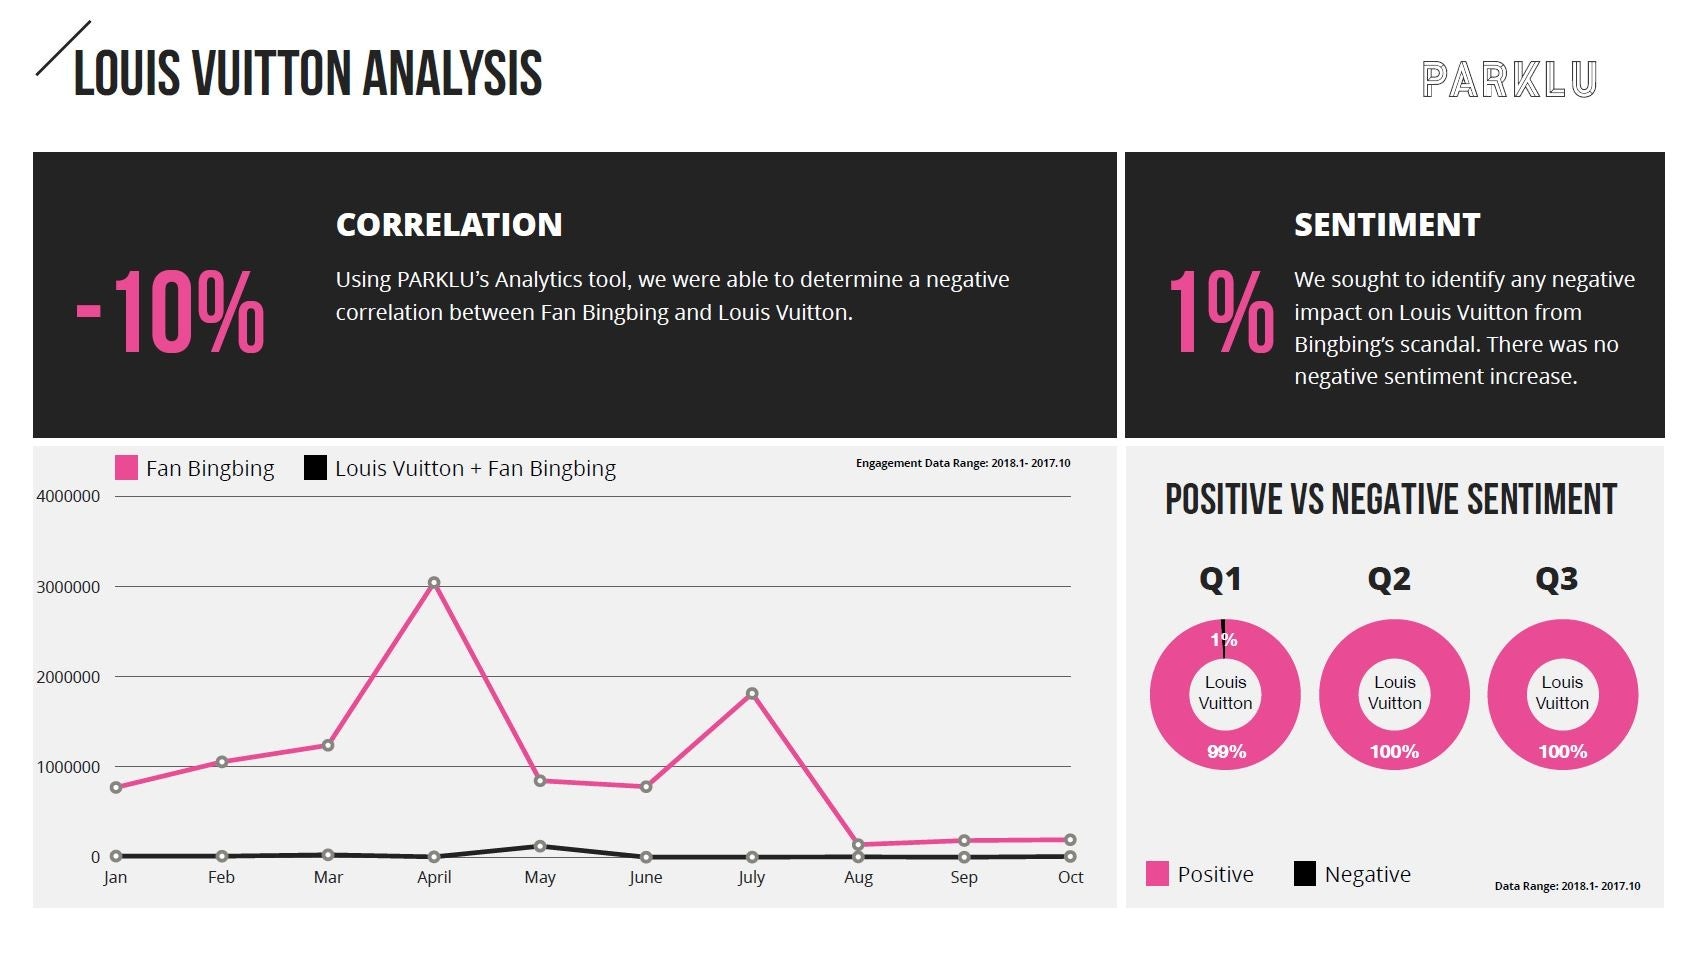 Louis Vuitton analysis. Source: ParkLu report